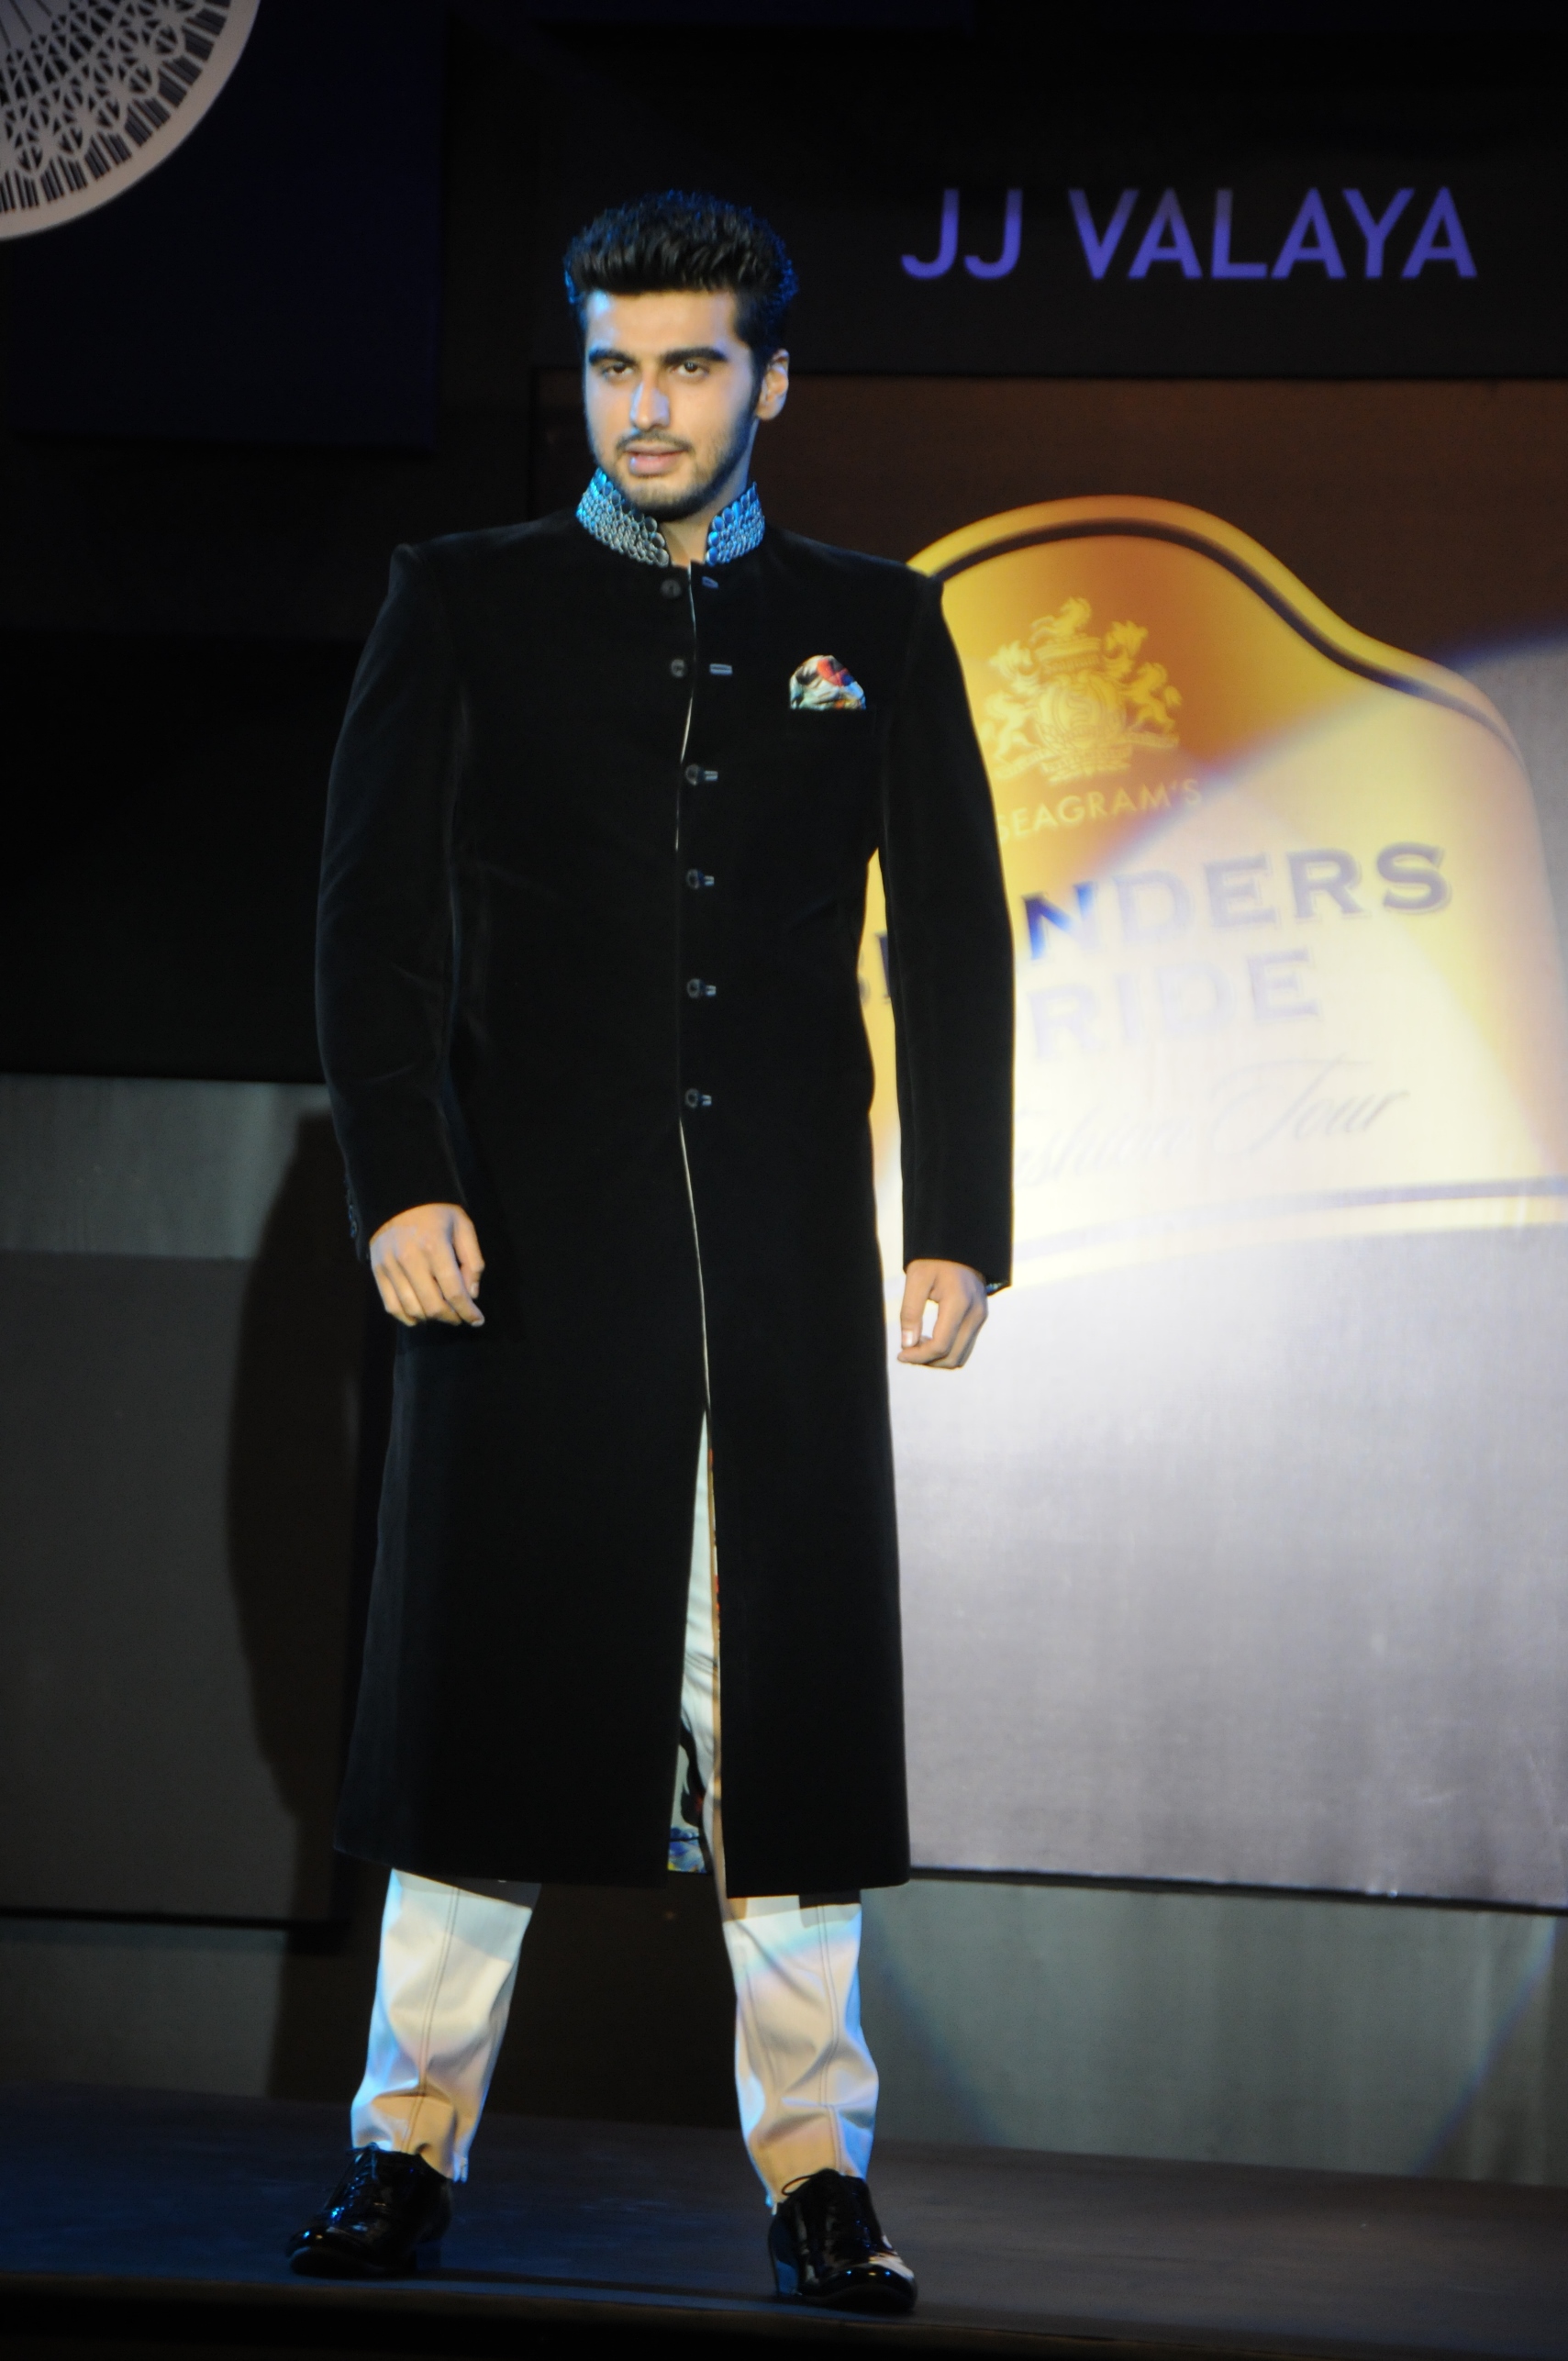 Arjun Kapoor Show Stopper for JJ Valaya